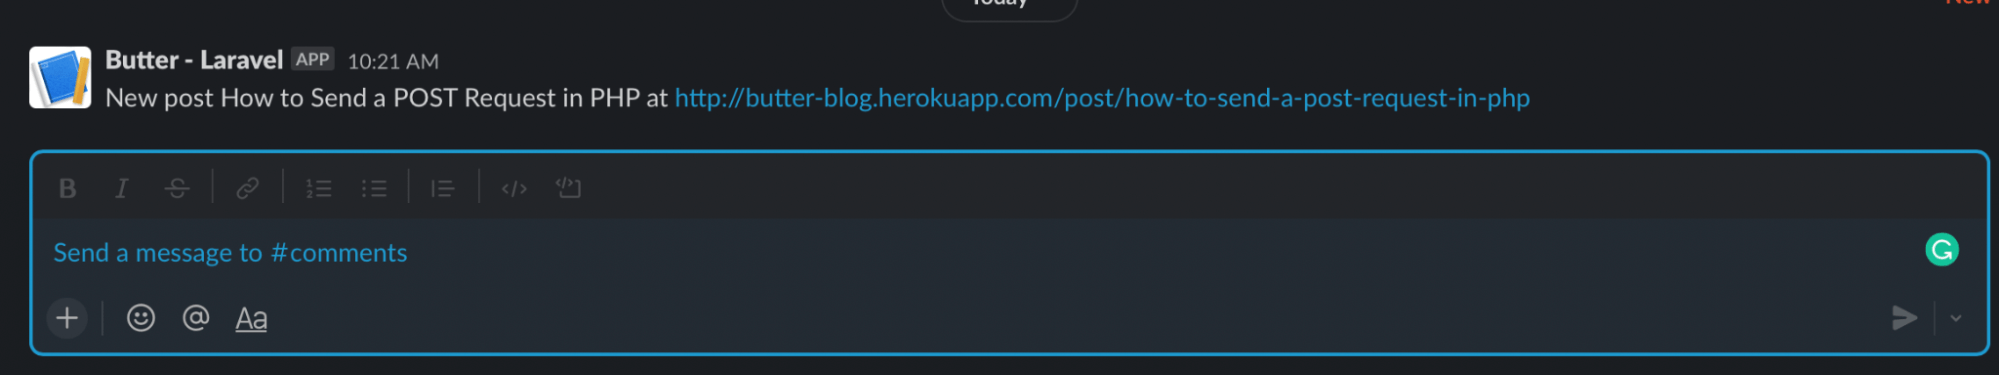 New post notification in Slack